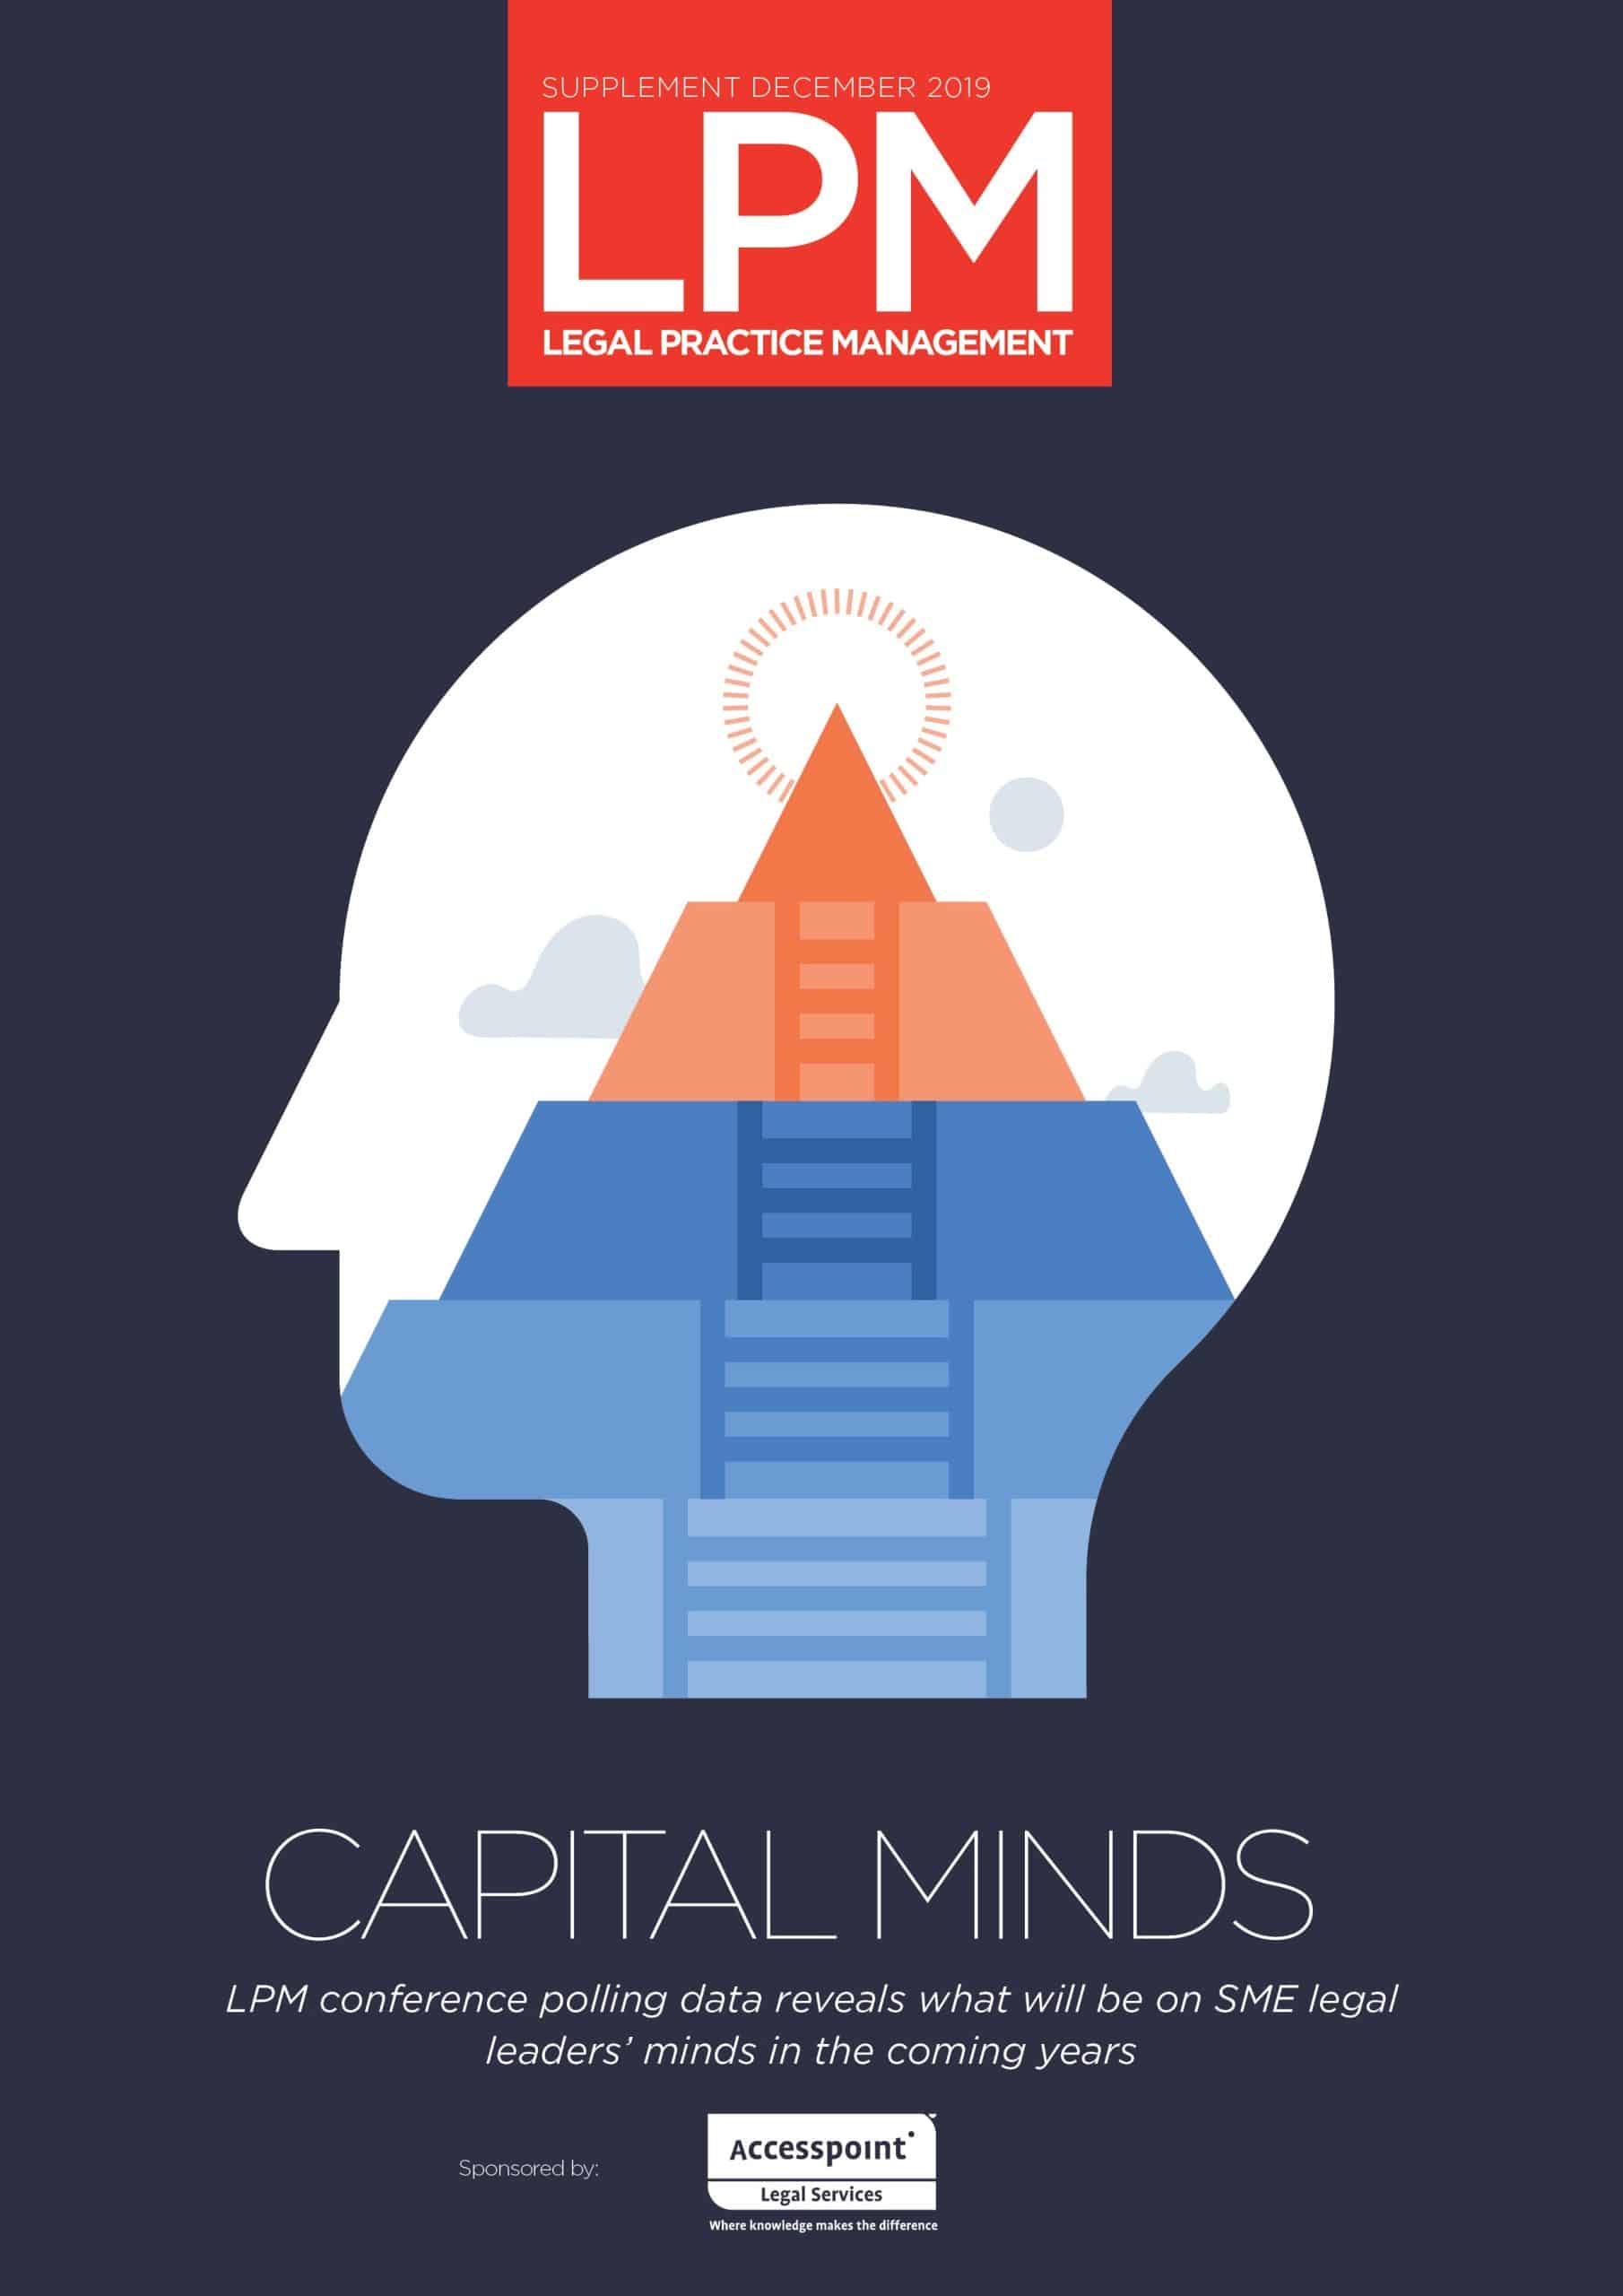 Capital minds